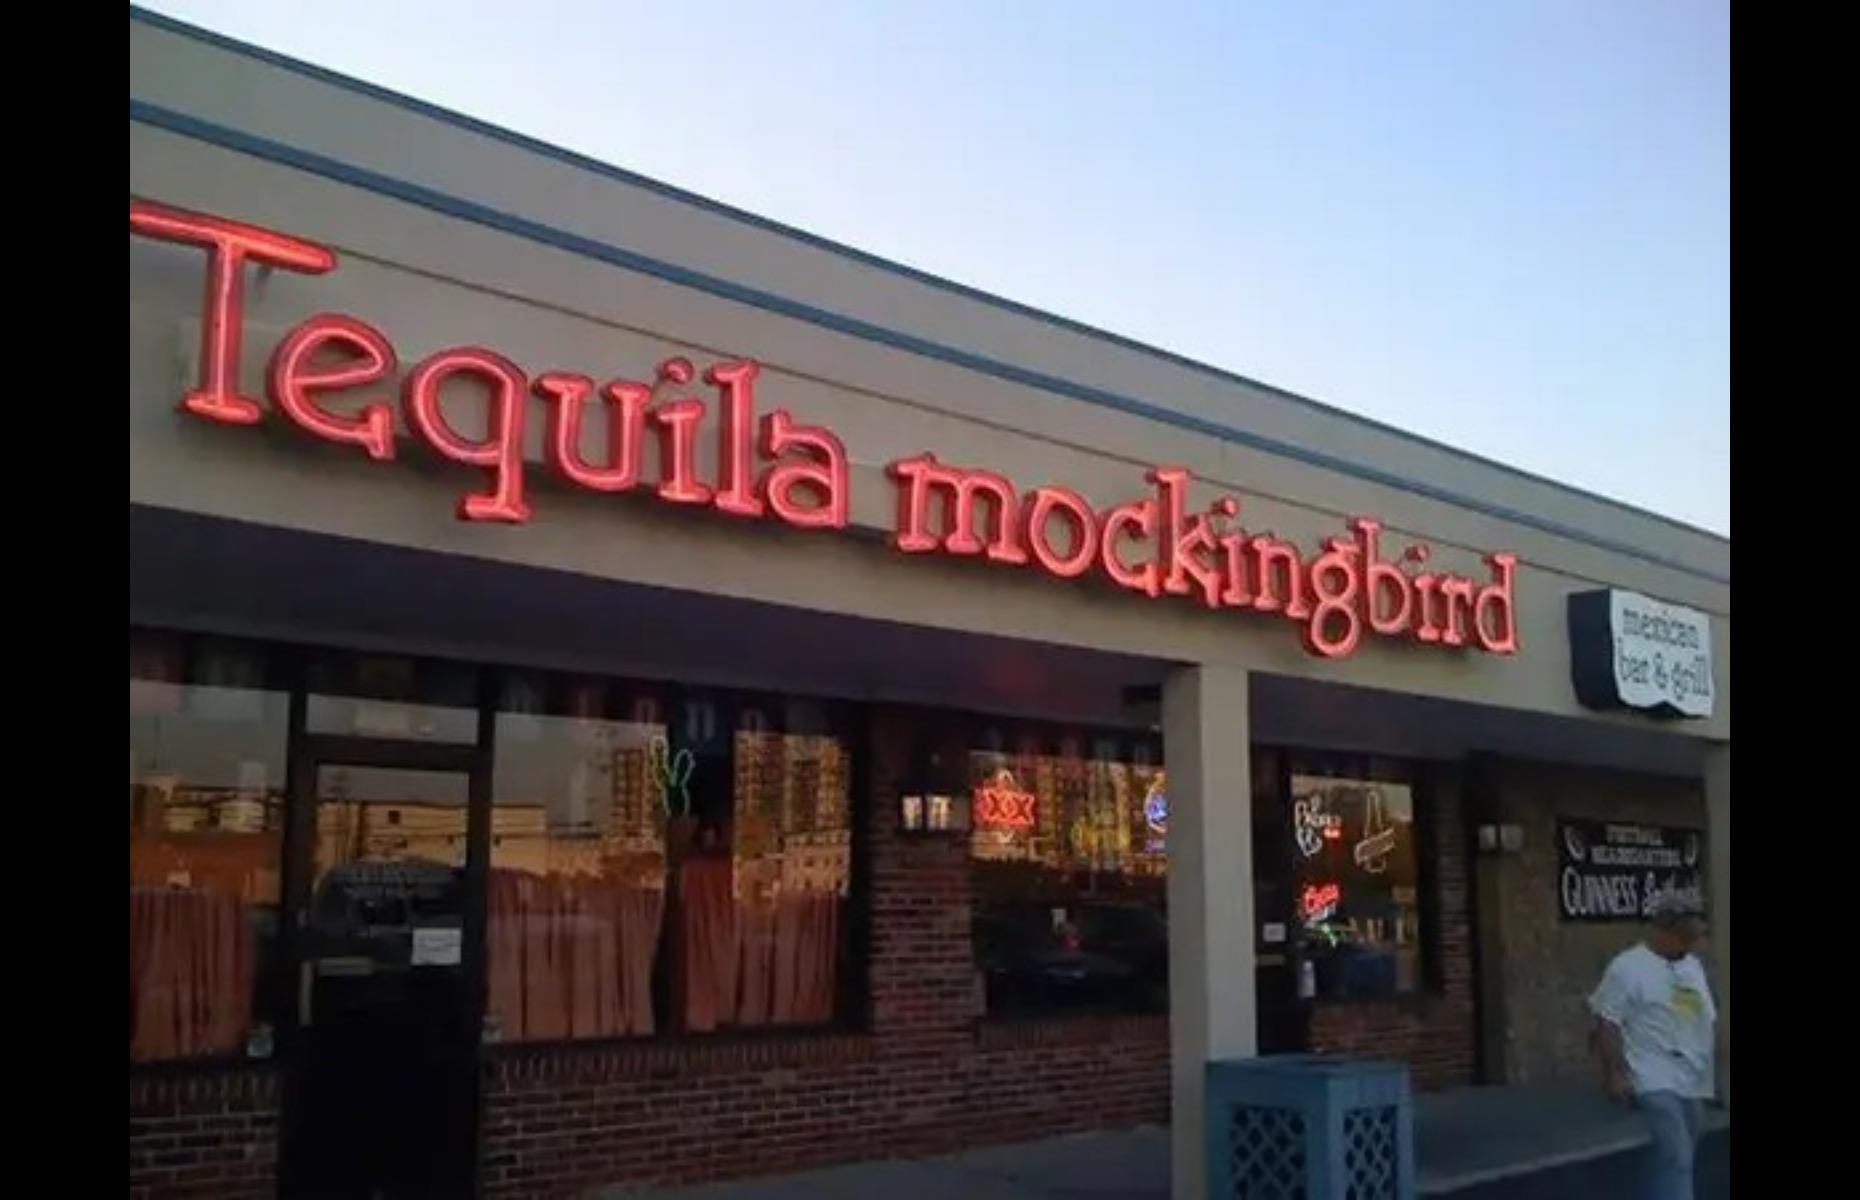 Tequila Mockingbird, USA